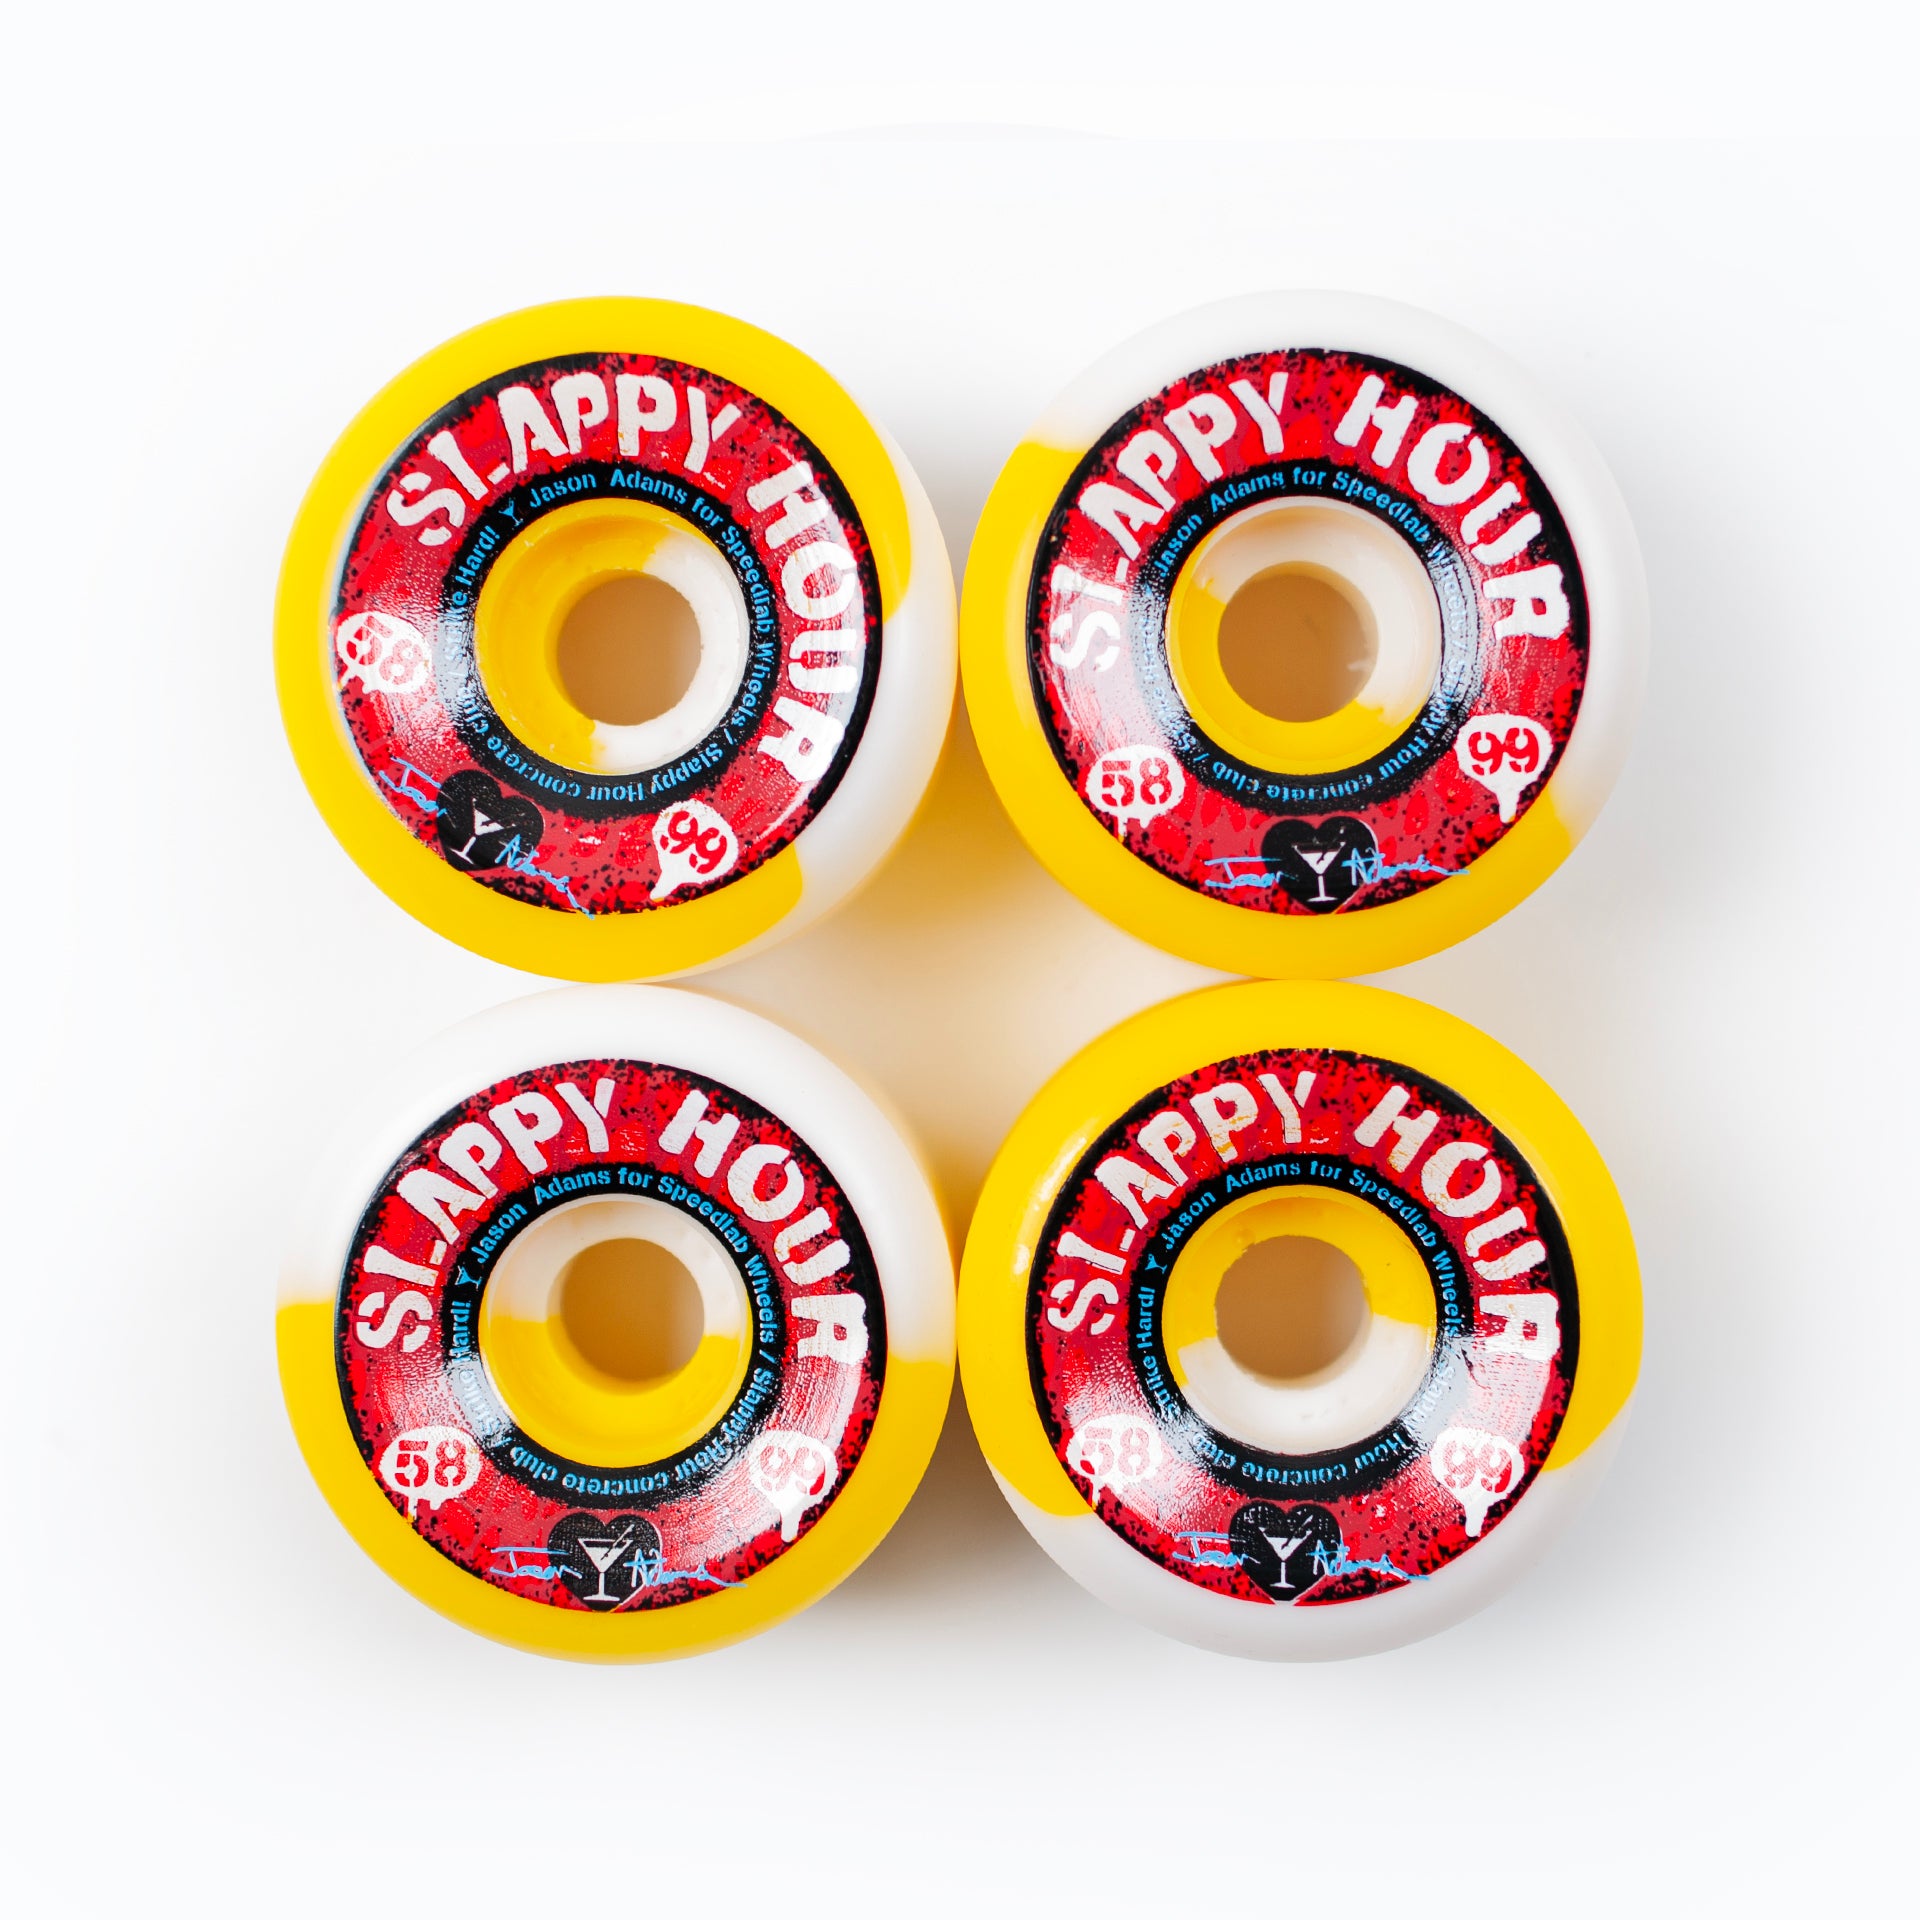 Speedlab - 58mm 99a Slappy Hour Jason Adams Pro Wheels - White/ Yellow